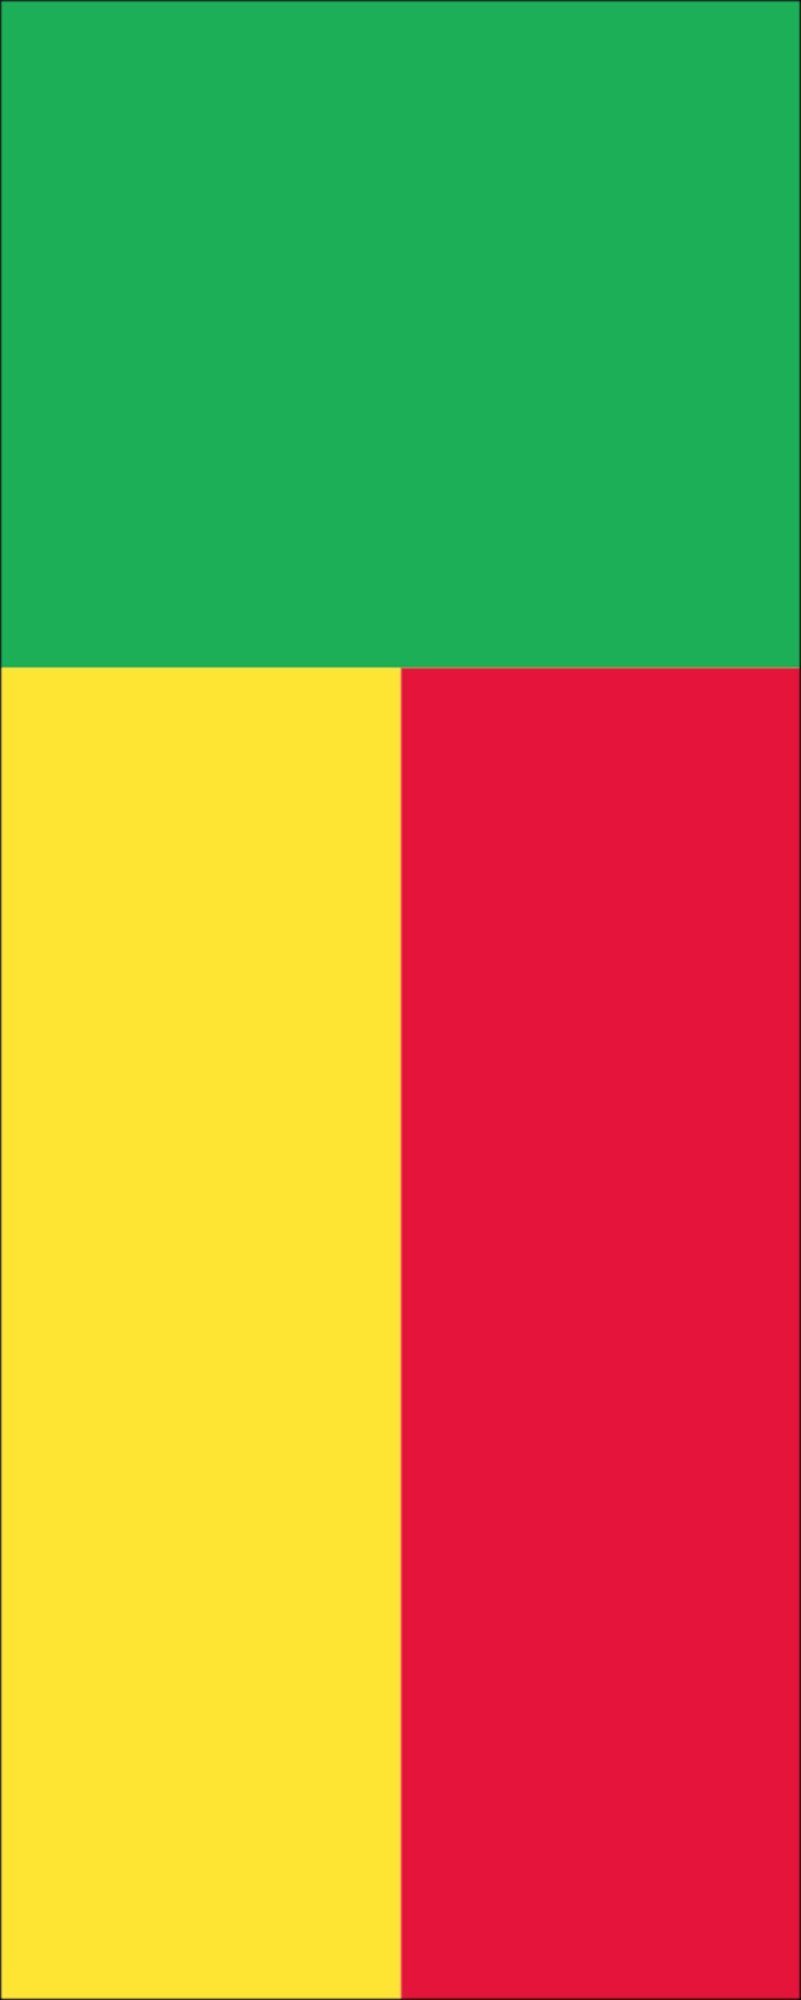 flaggenmeer Flagge Flagge Hochformat g/m² 110 Benin